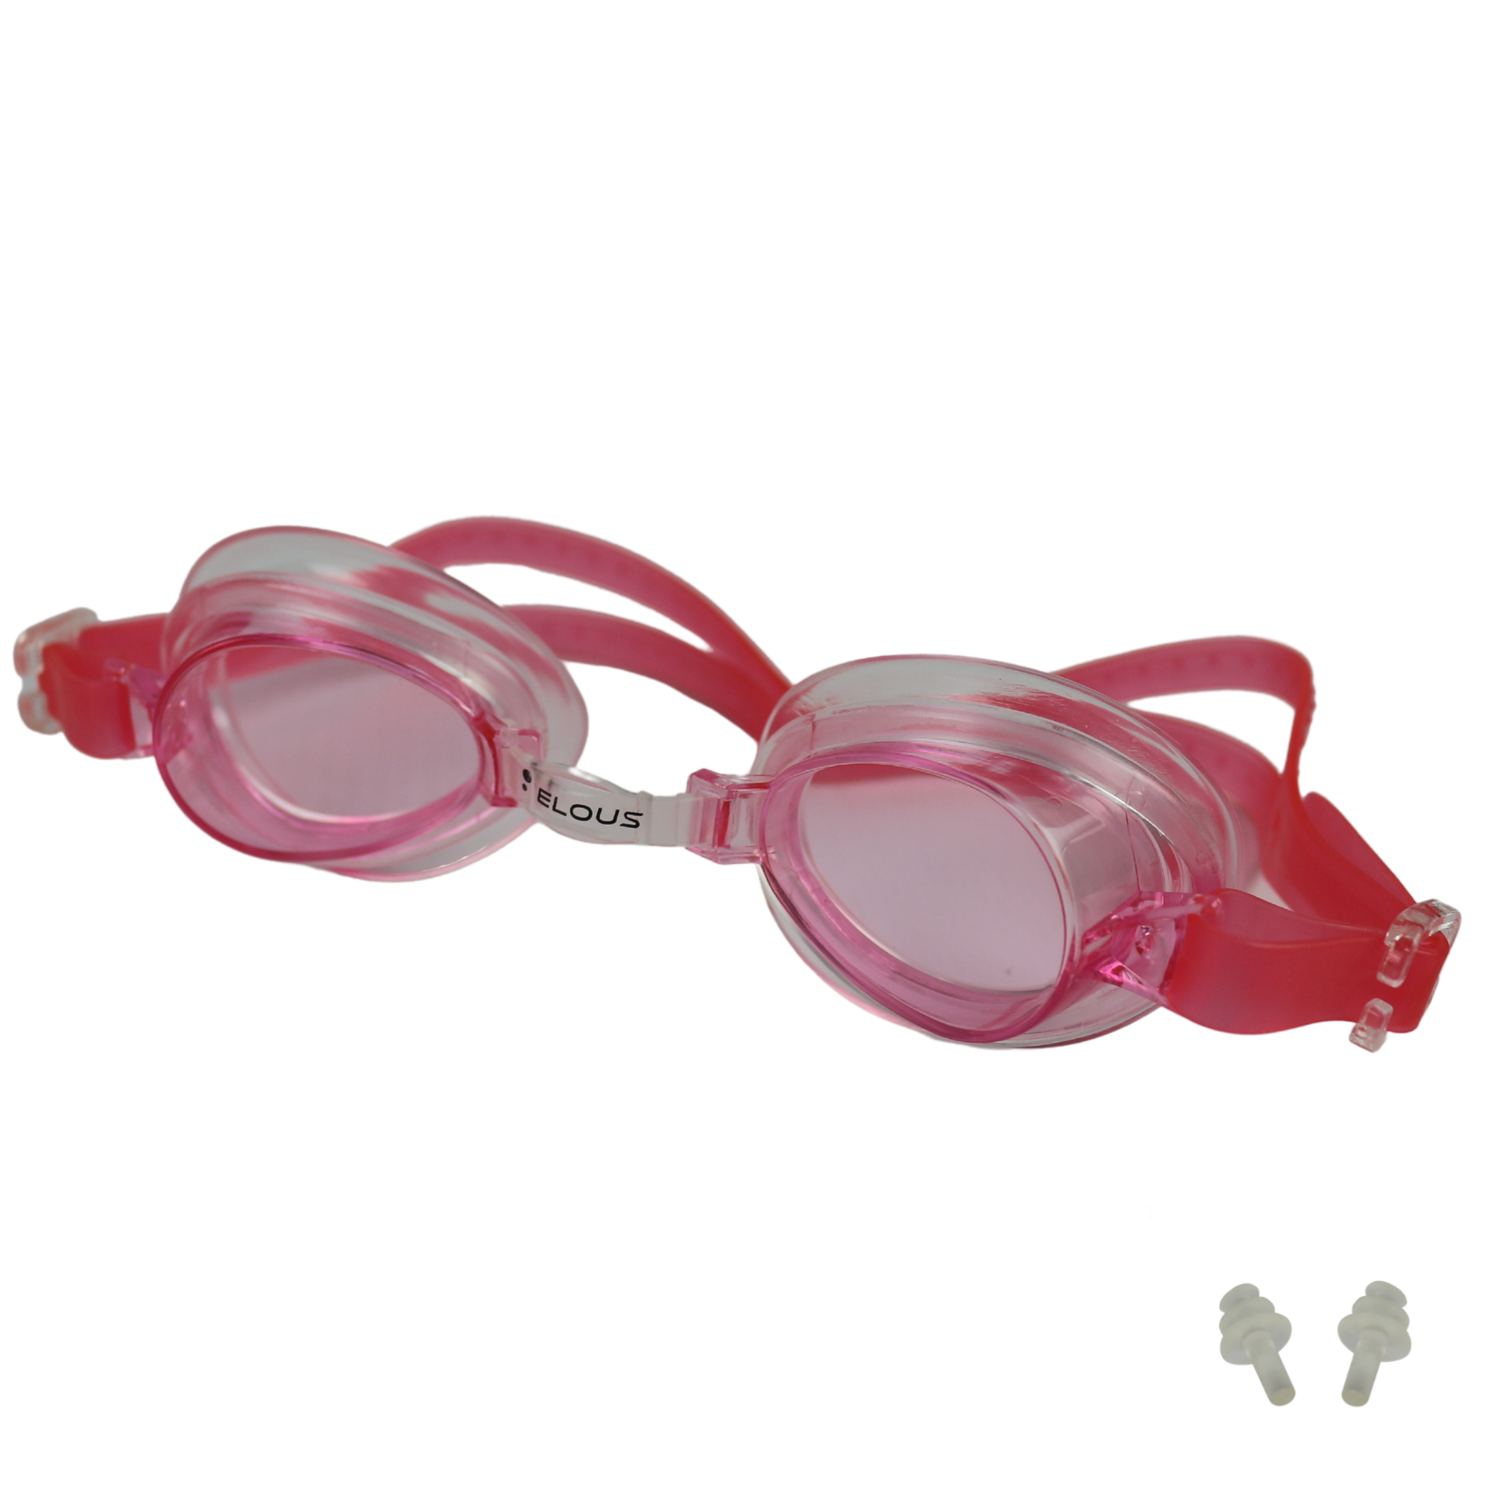 Очки для плавания Elous YG-1210 розовые - фото 1